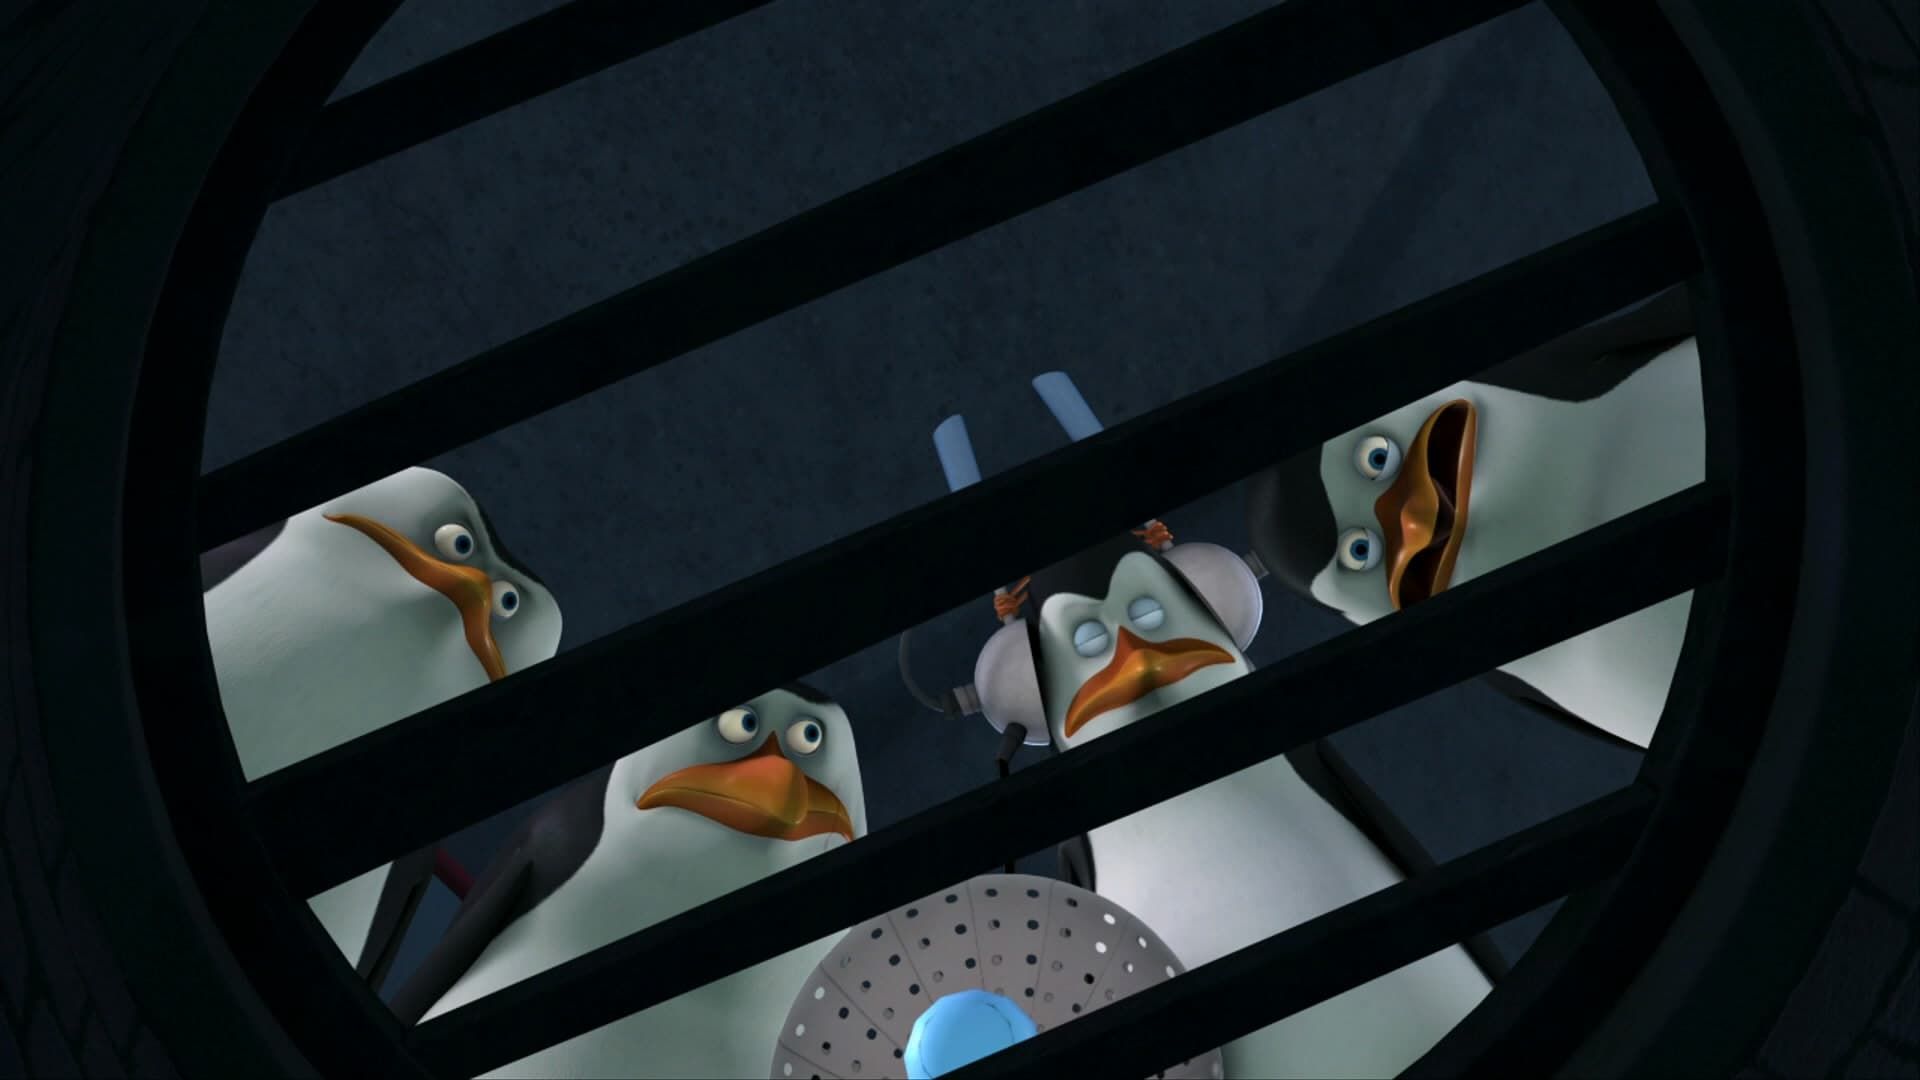 The Penguins of Madagascar background